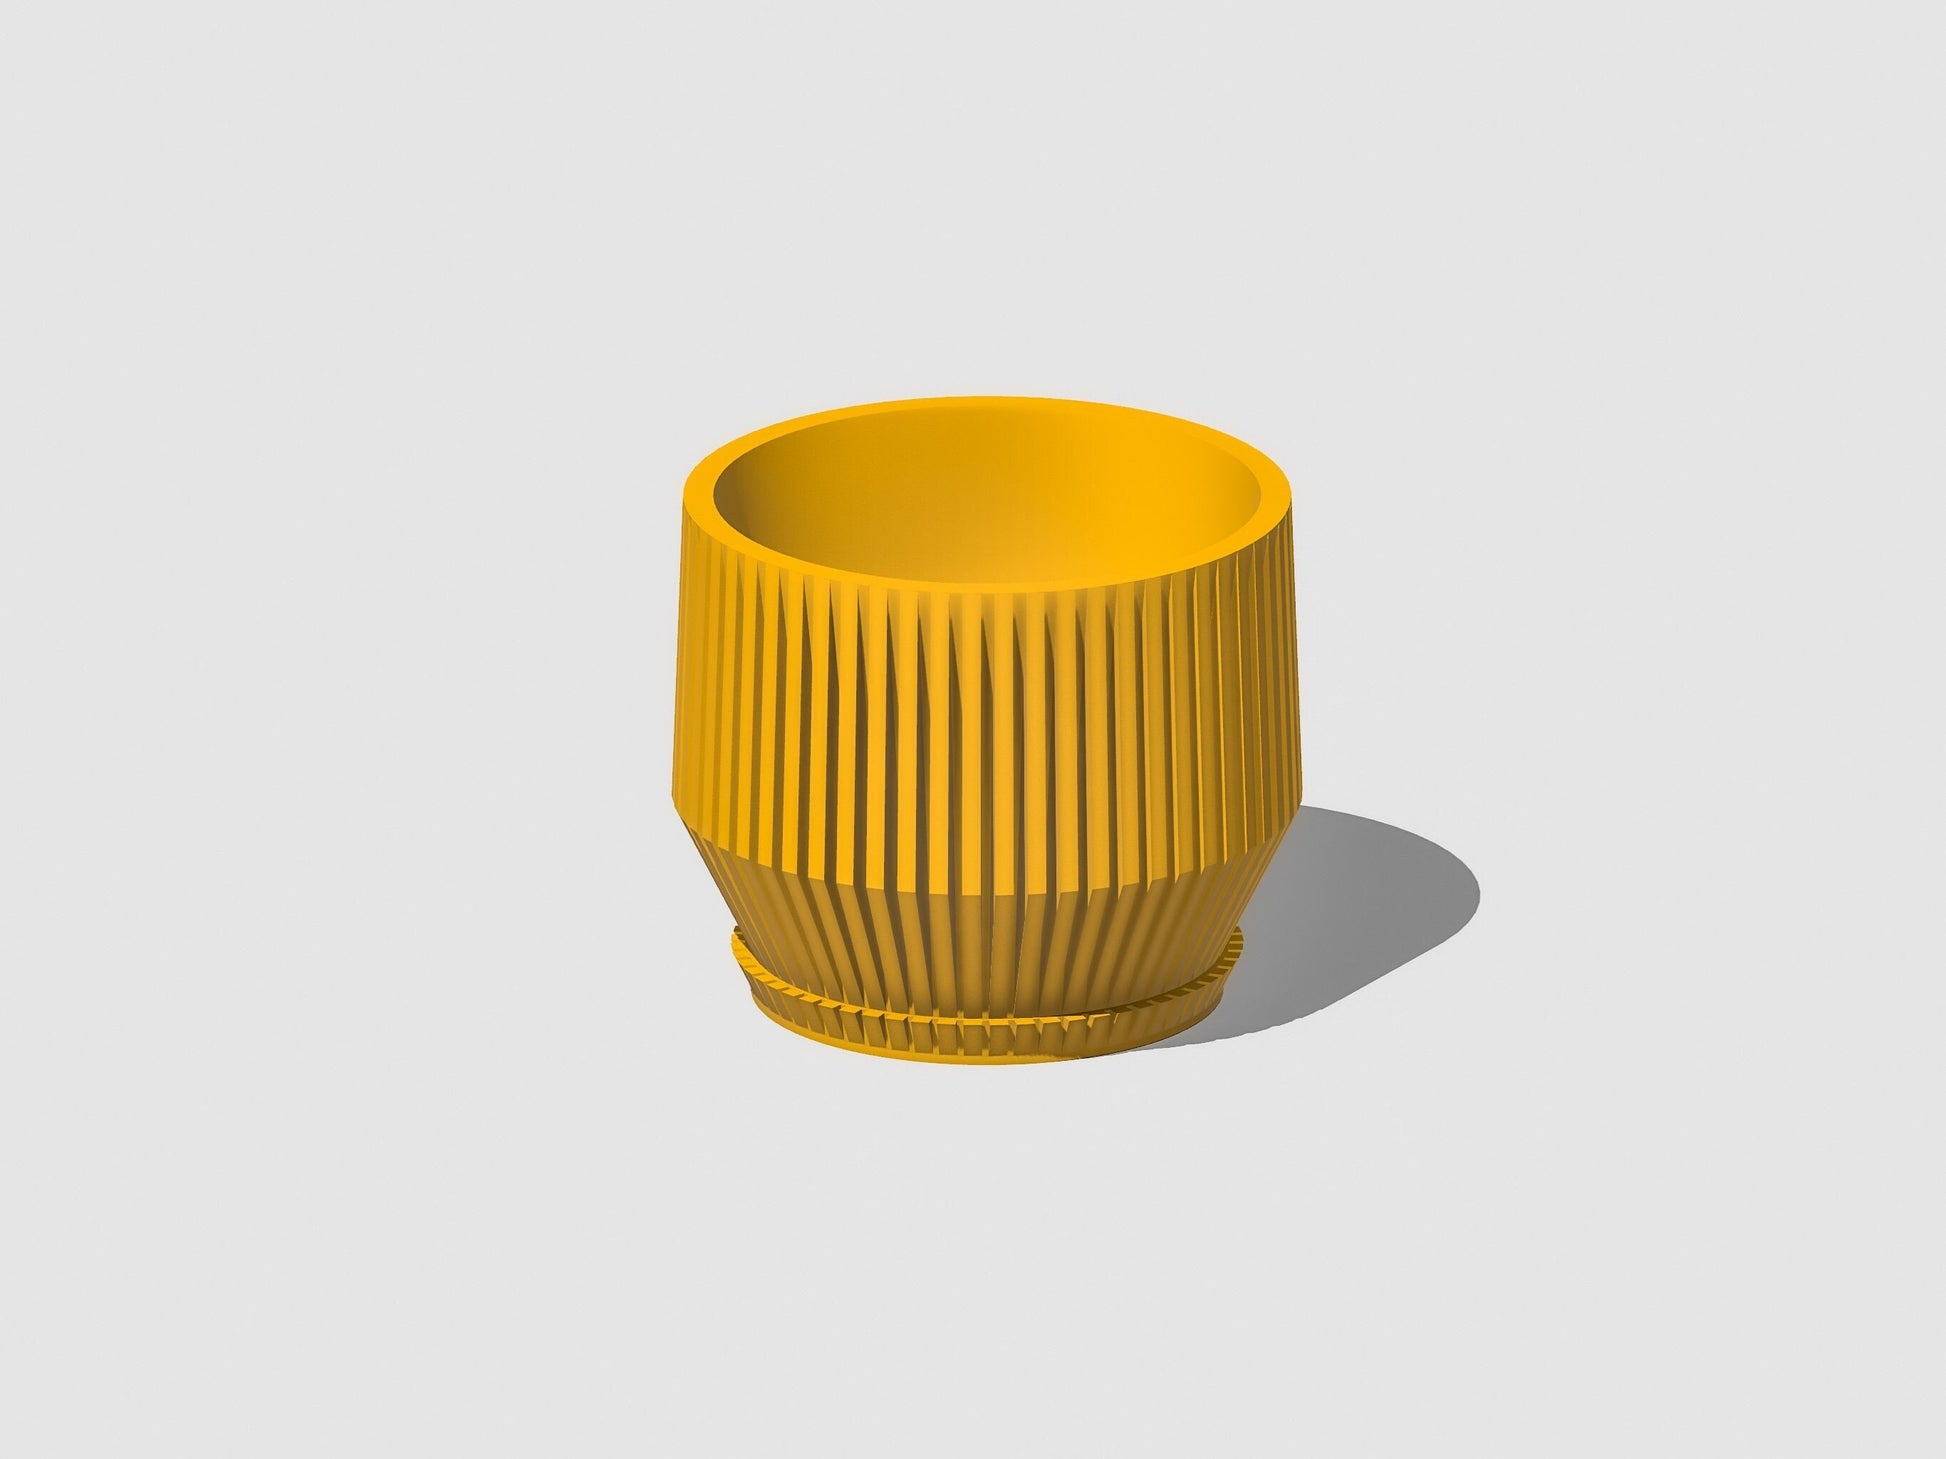 Unique Plant Pot with Drainage, 3D Printed Planter Pot Unique Modern Ribbed Design, Lightweight Skyline